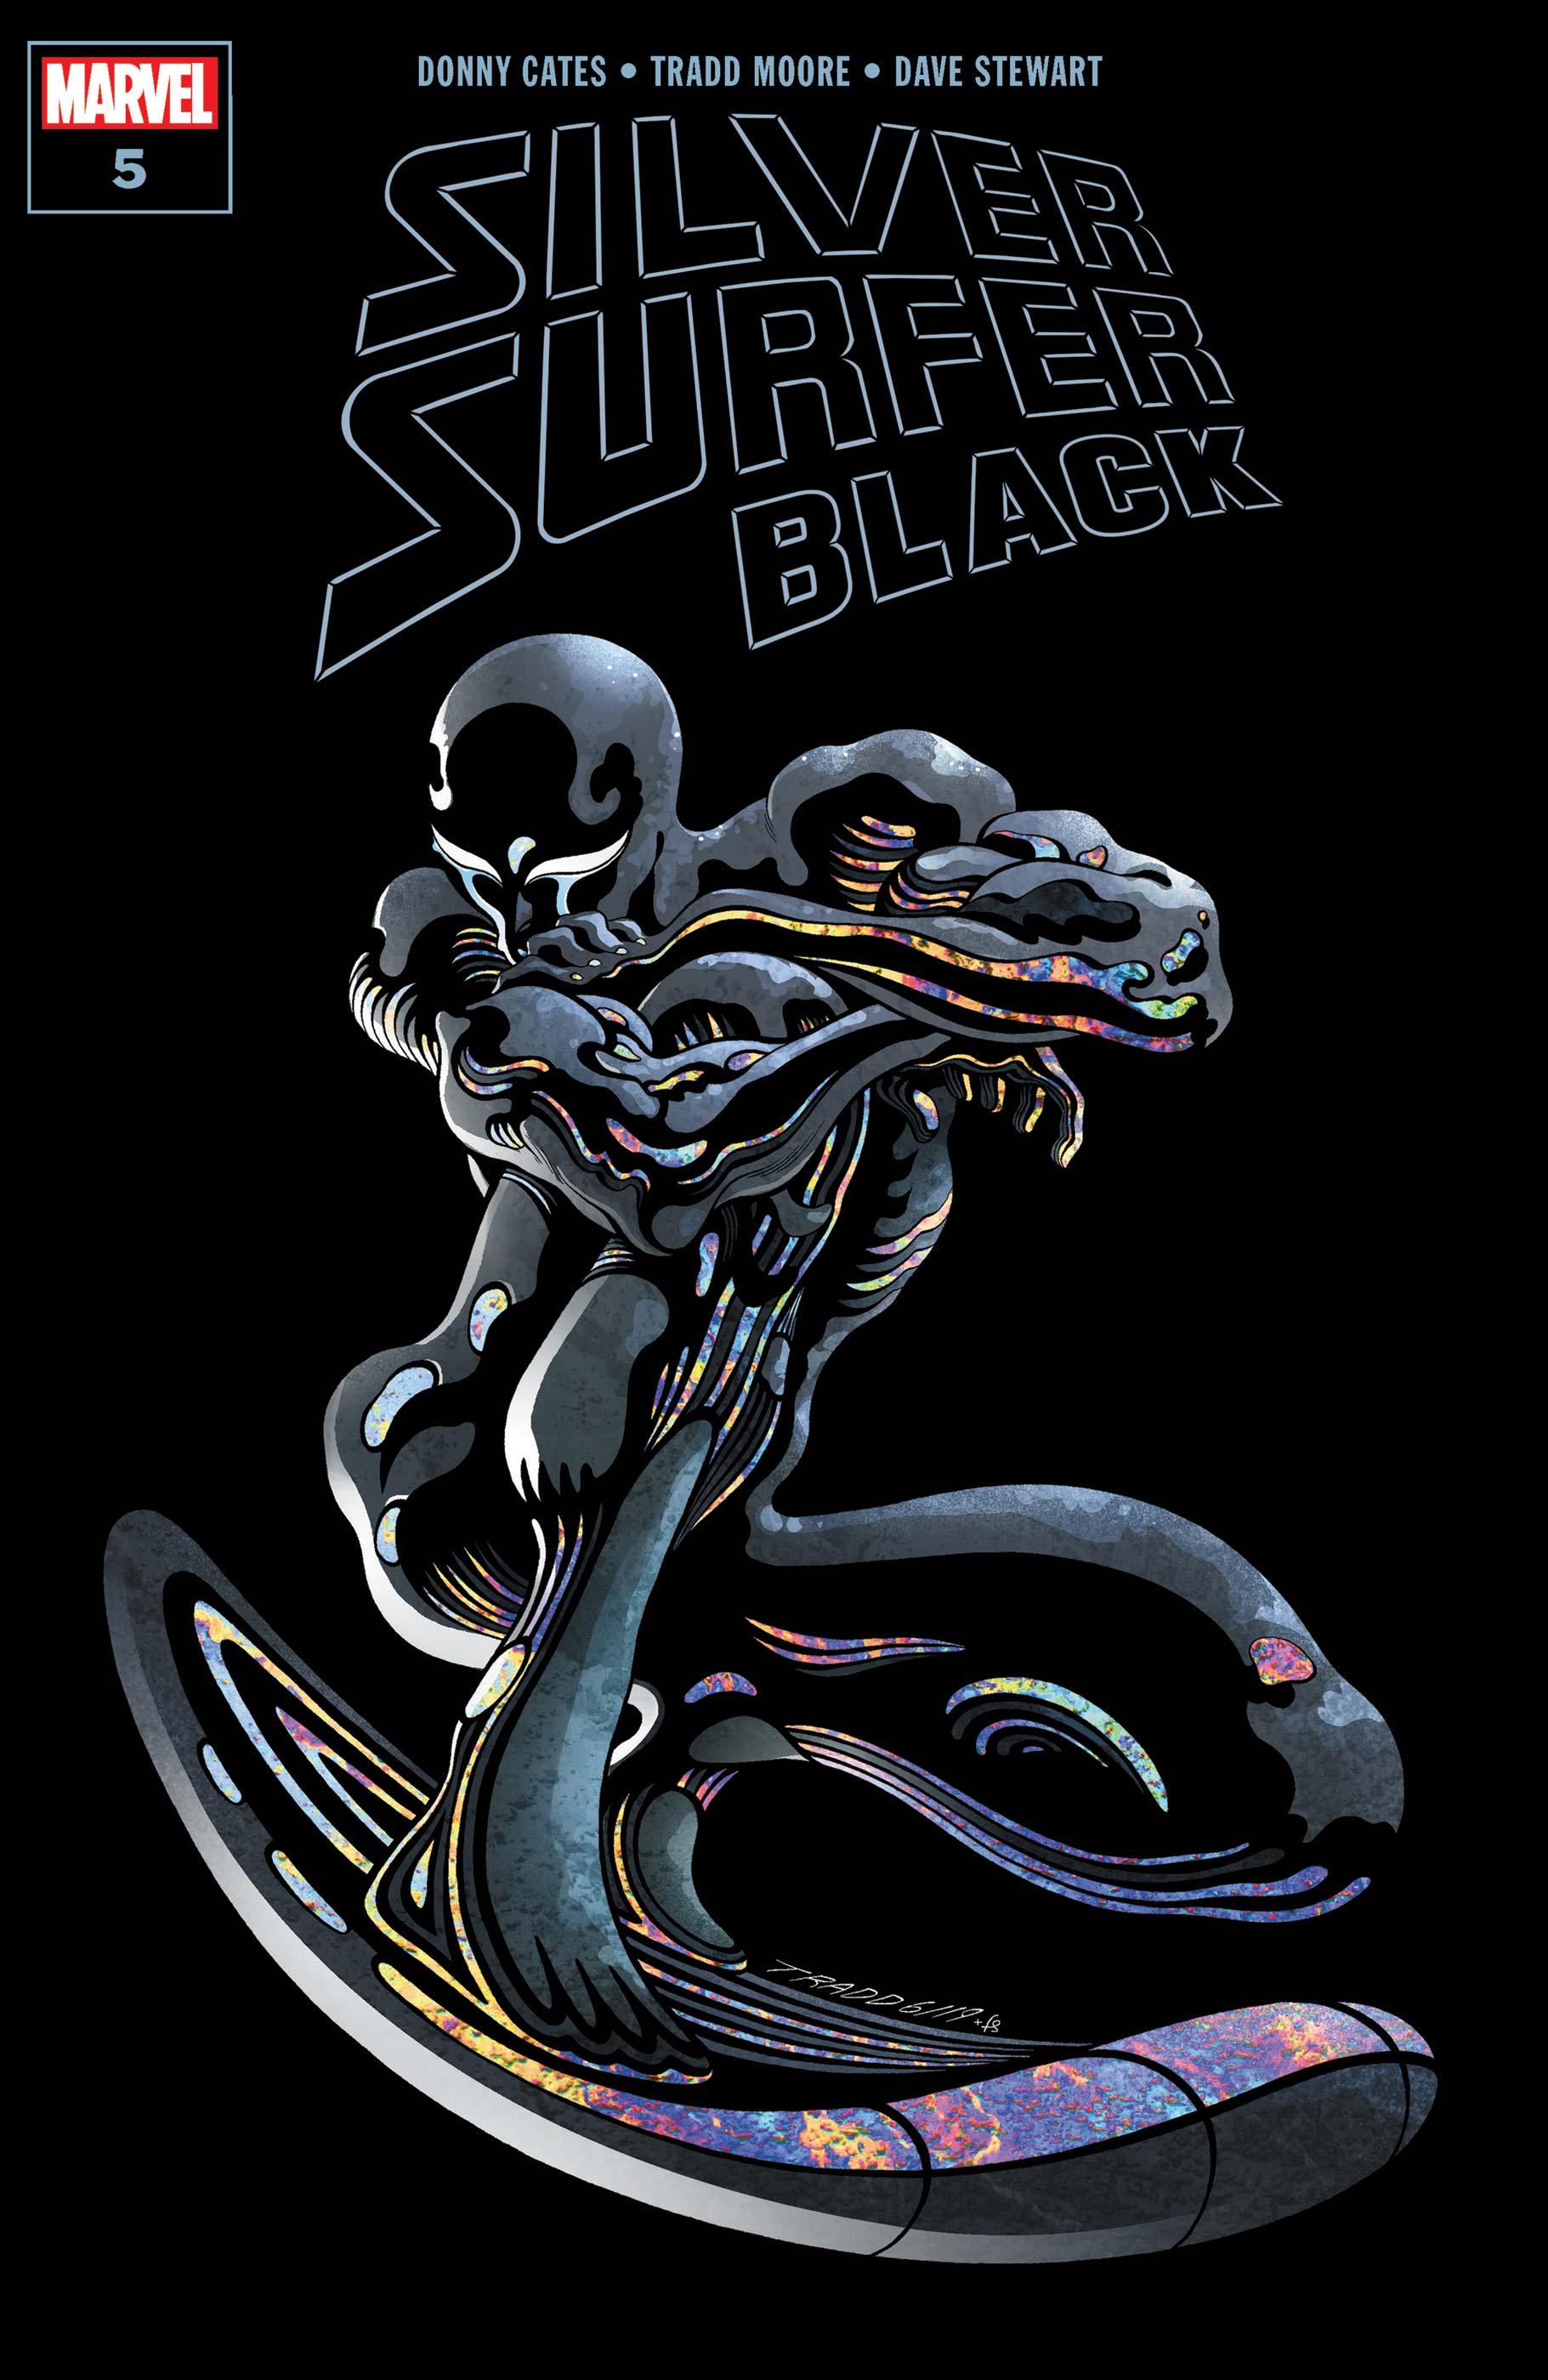 Silver surfer: black